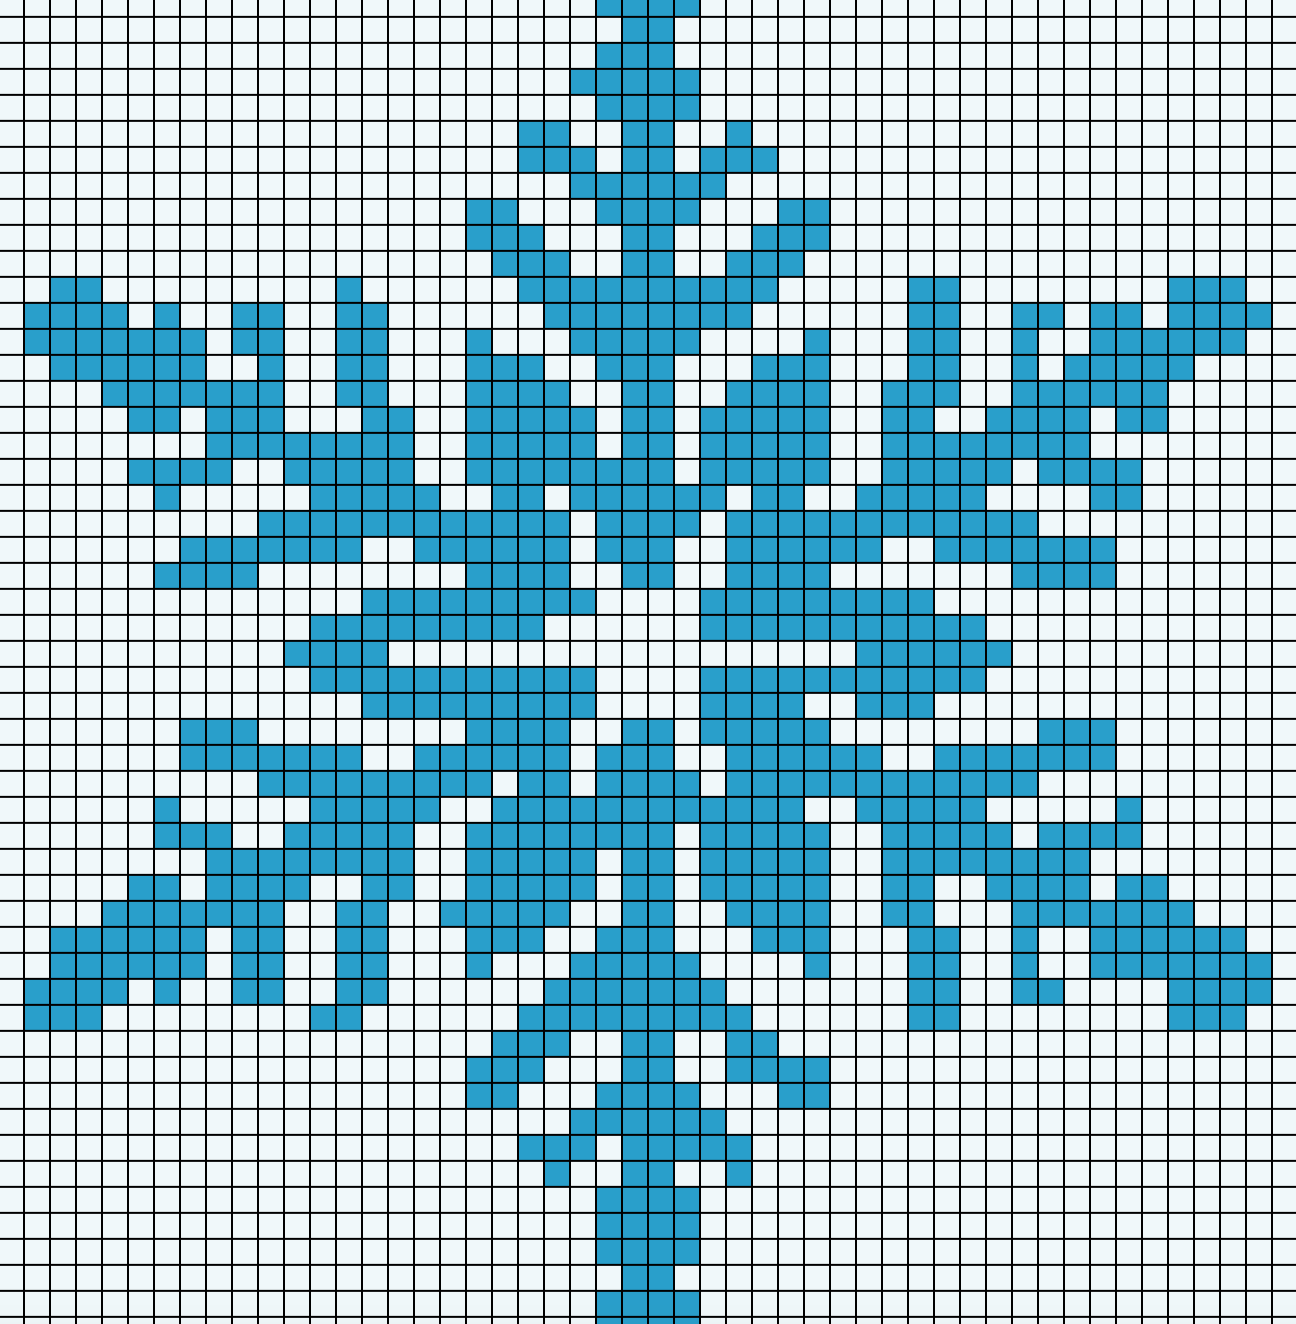 Stitch a Simple Snowflake – Cross-Stitch